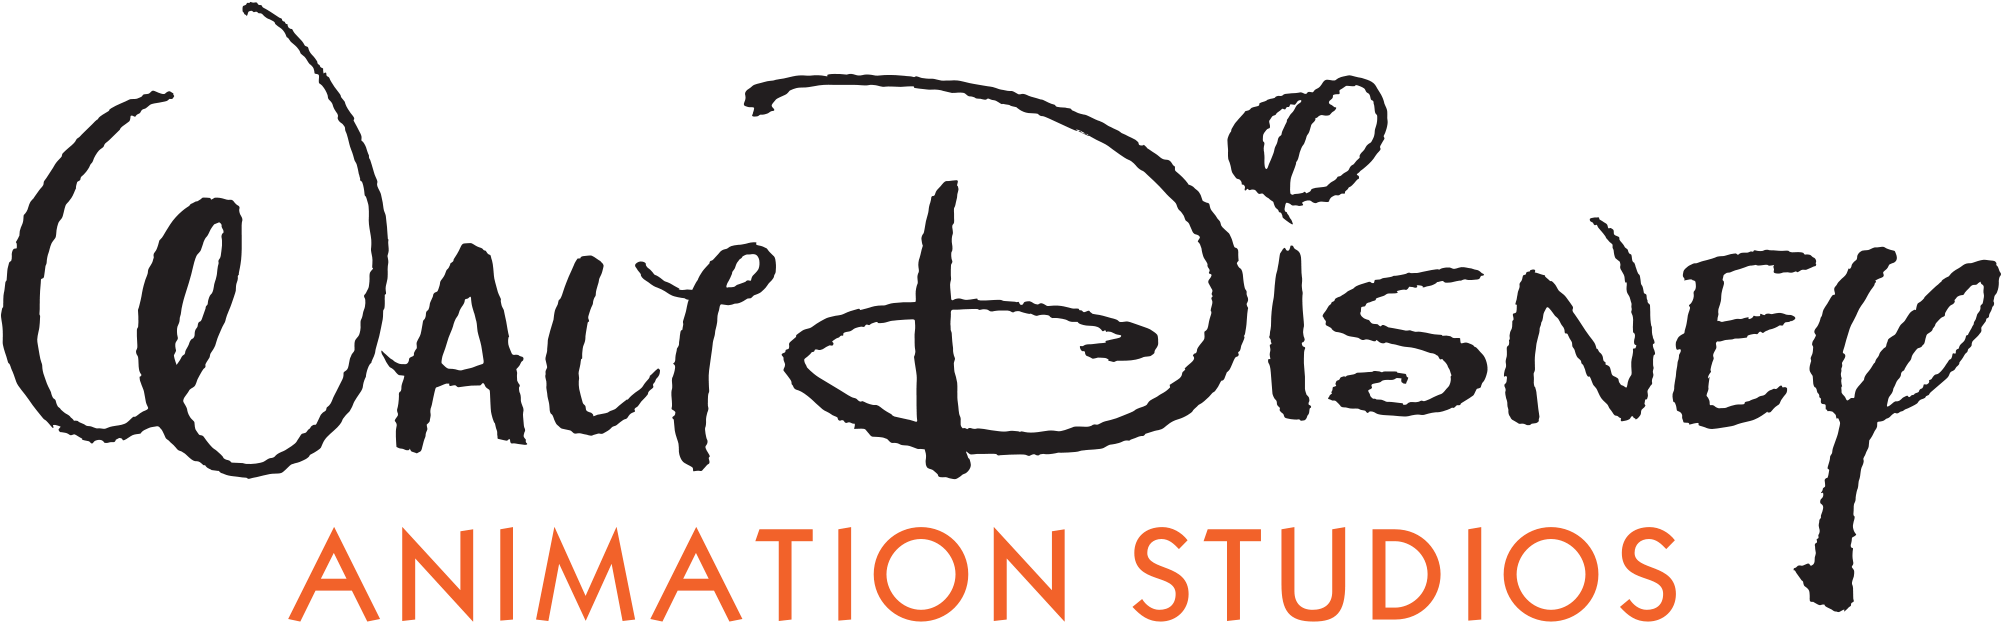 Walt Disney Animation Studios - Disney Animation Studios Logo Png Clipart (2000x633), Png Download